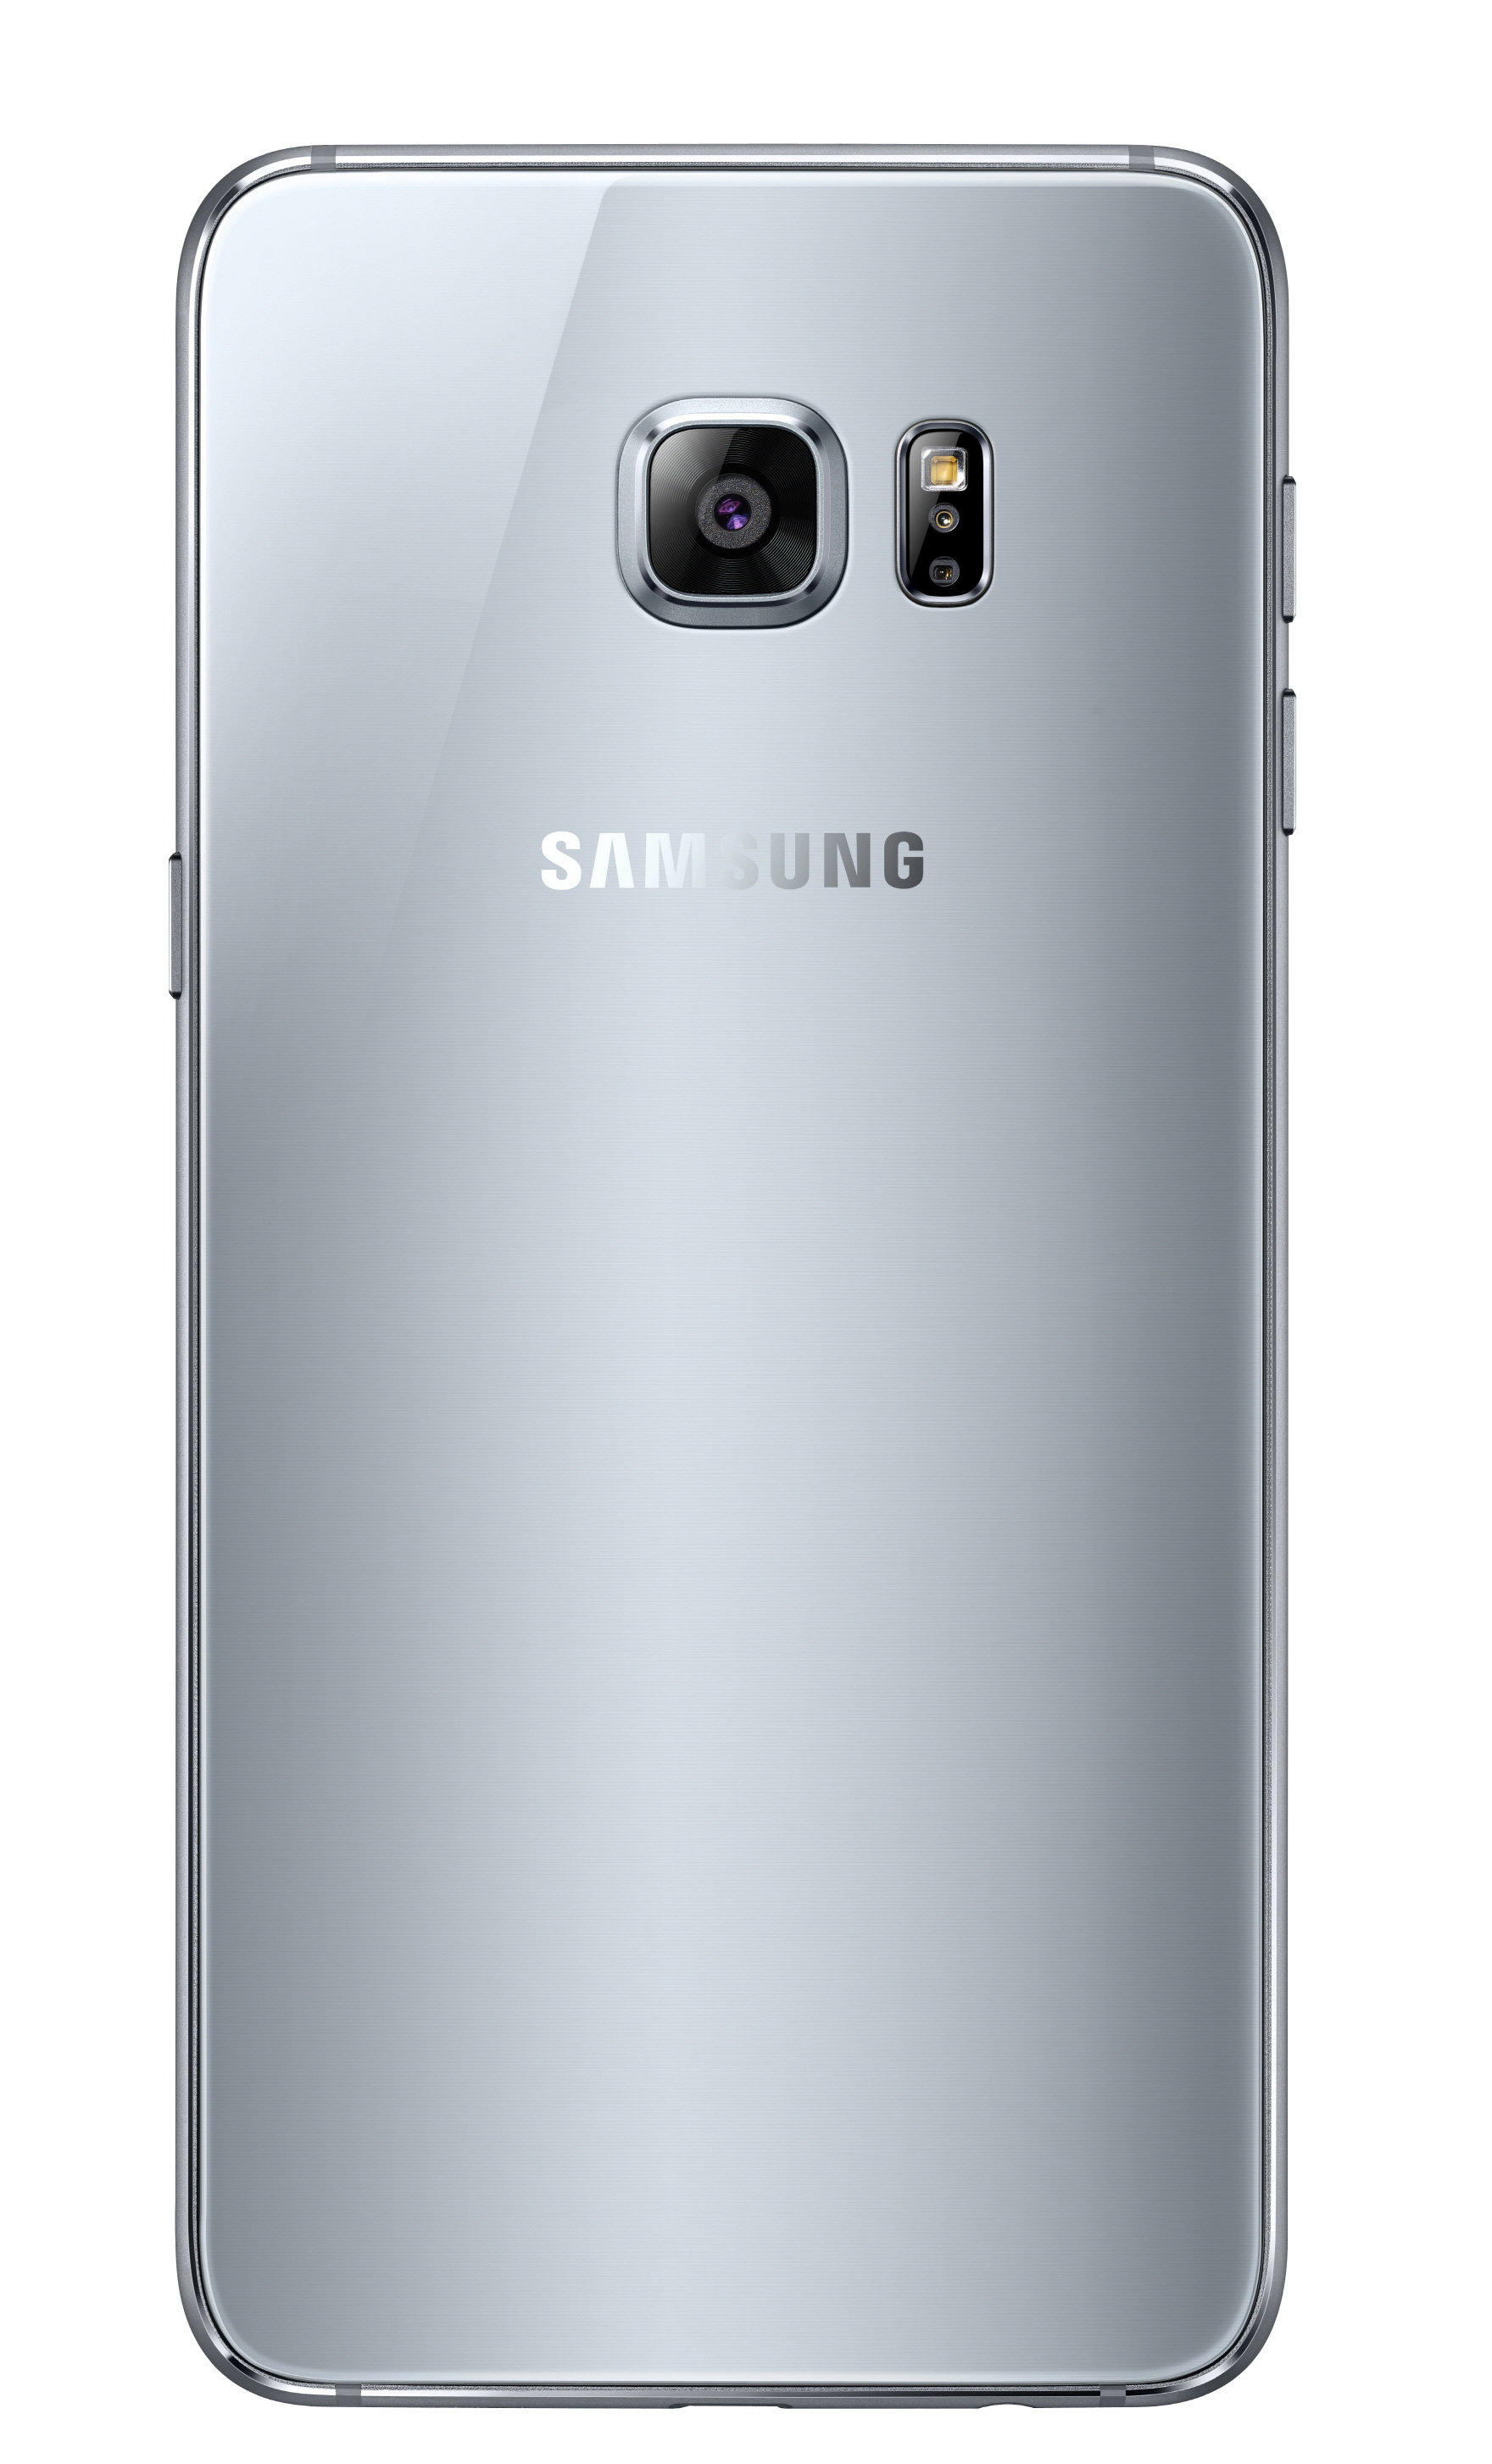 Galaxy-S6-edge+_back_Siver-Titanium